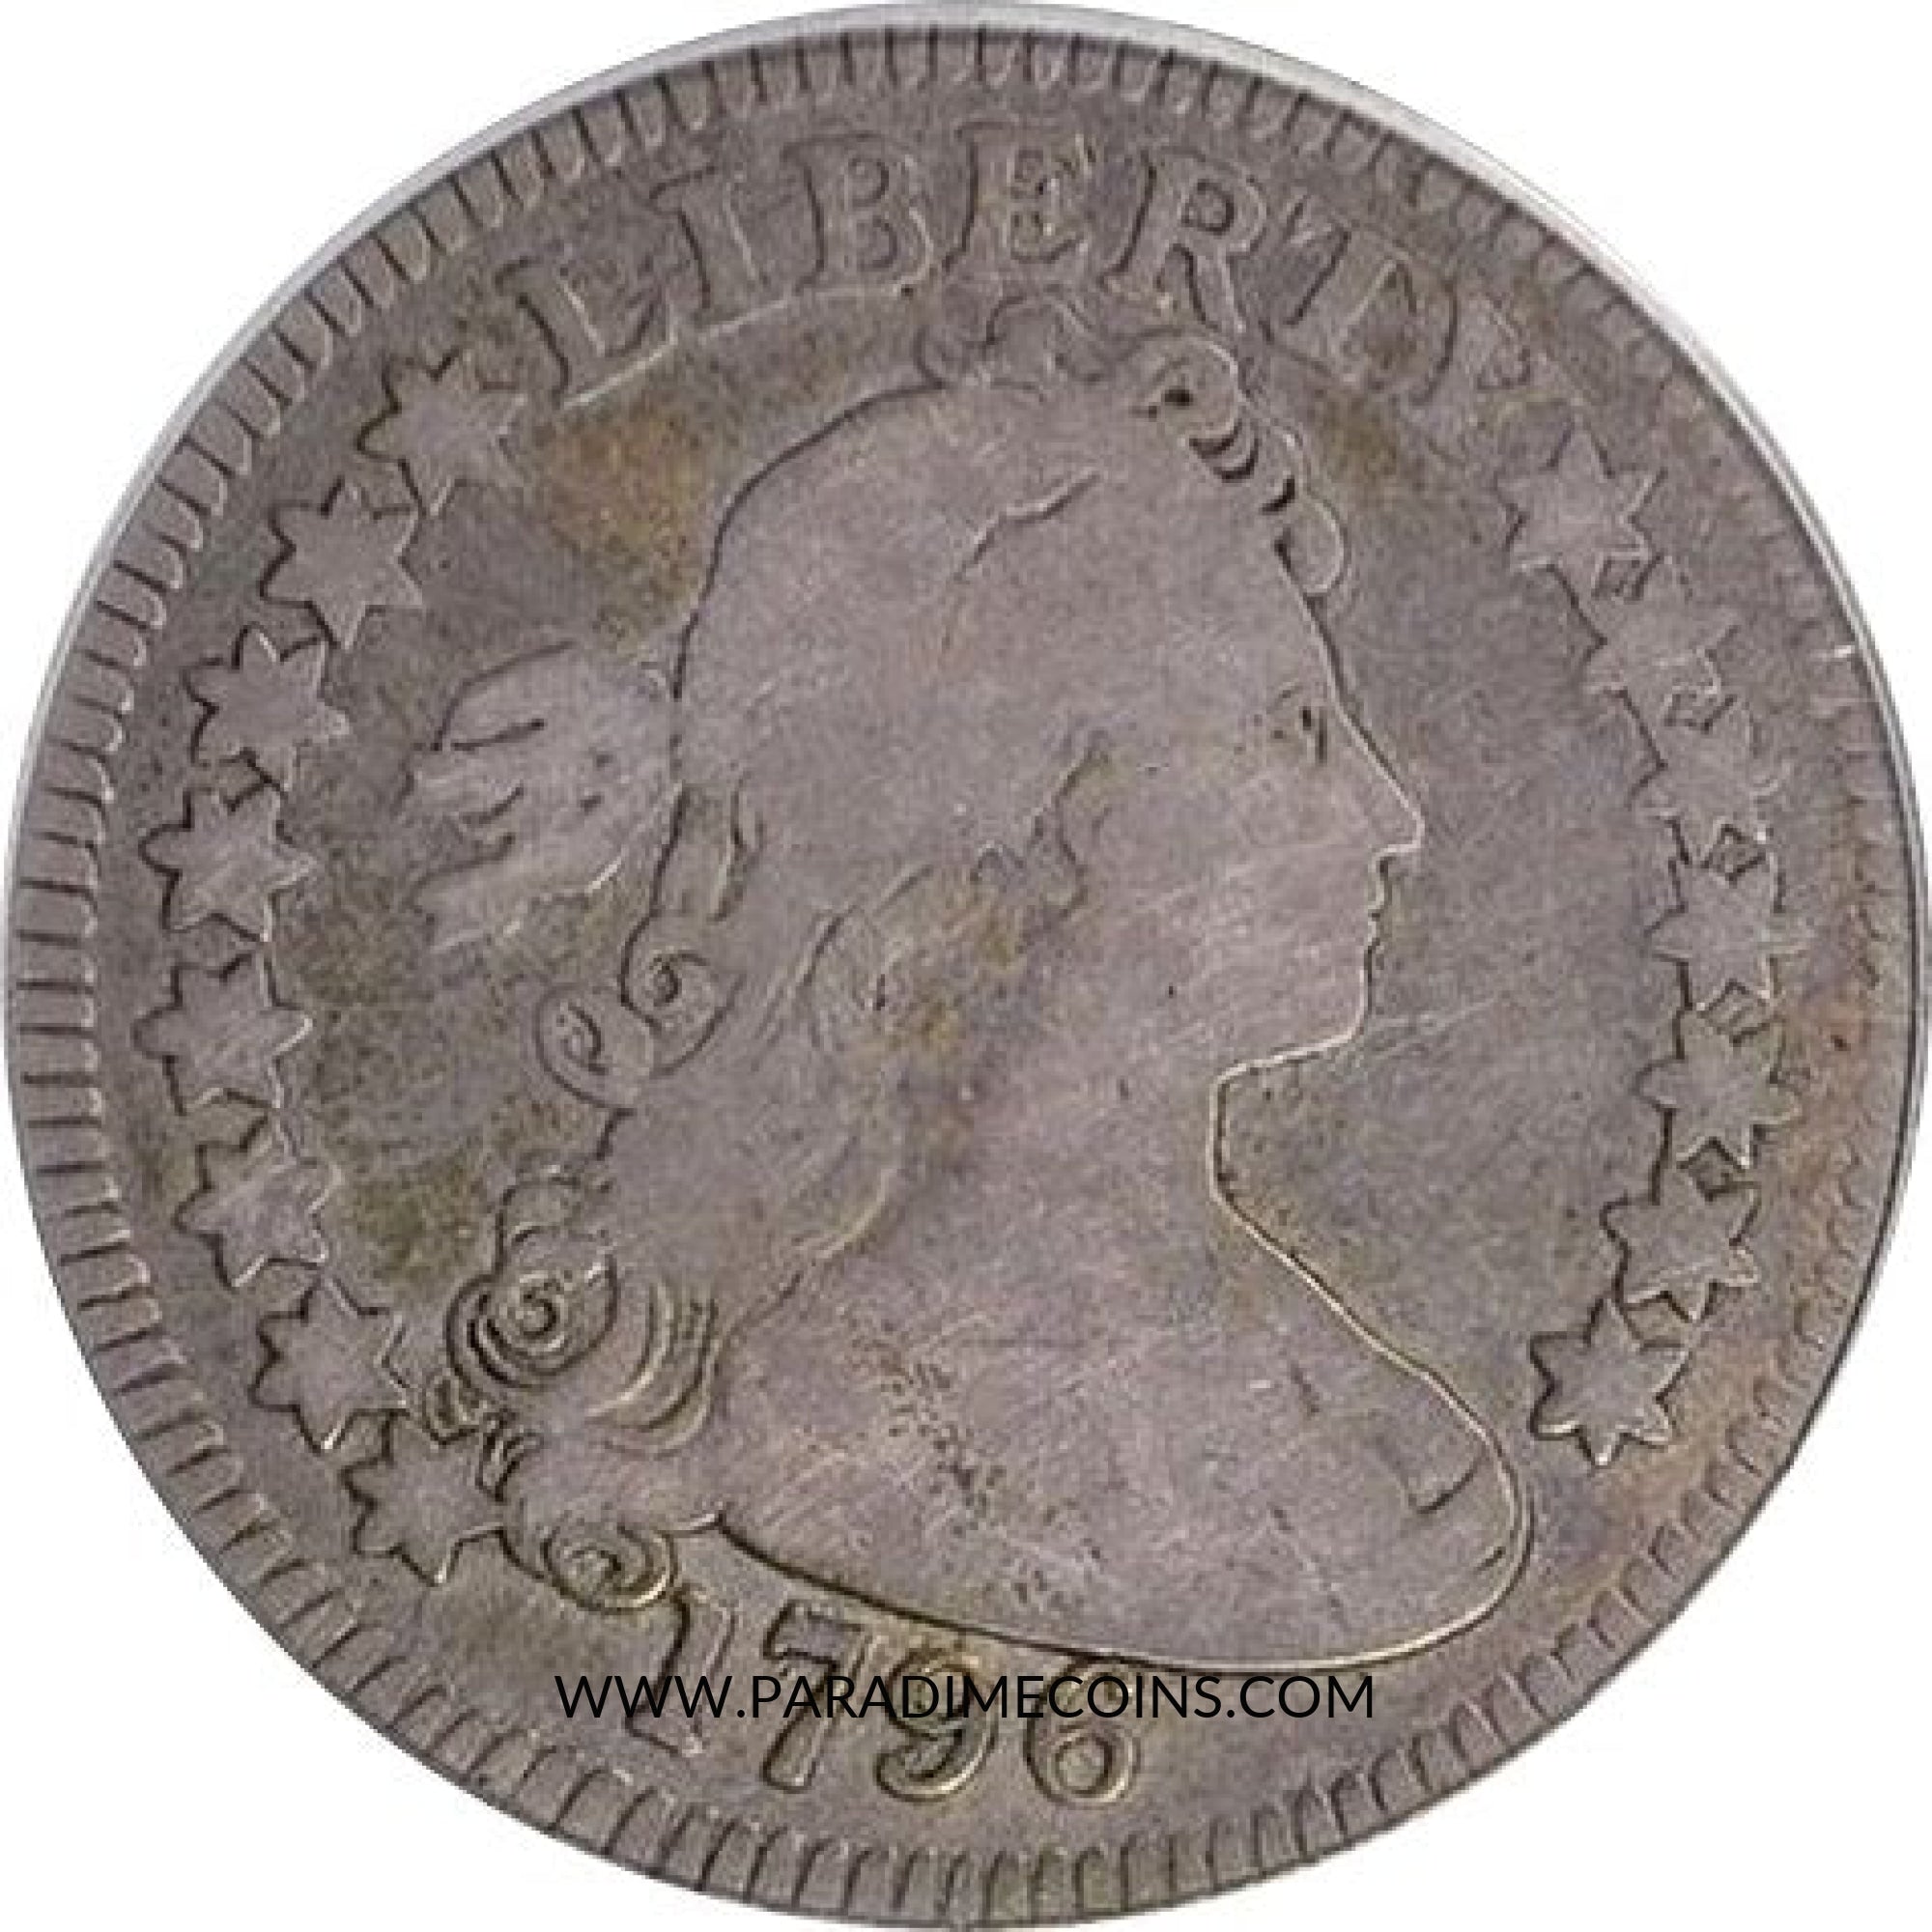 1796 25C VG08 OGH PCGS - Paradime Coins | PCGS NGC CACG CAC Rare US Numismatic Coins For Sale